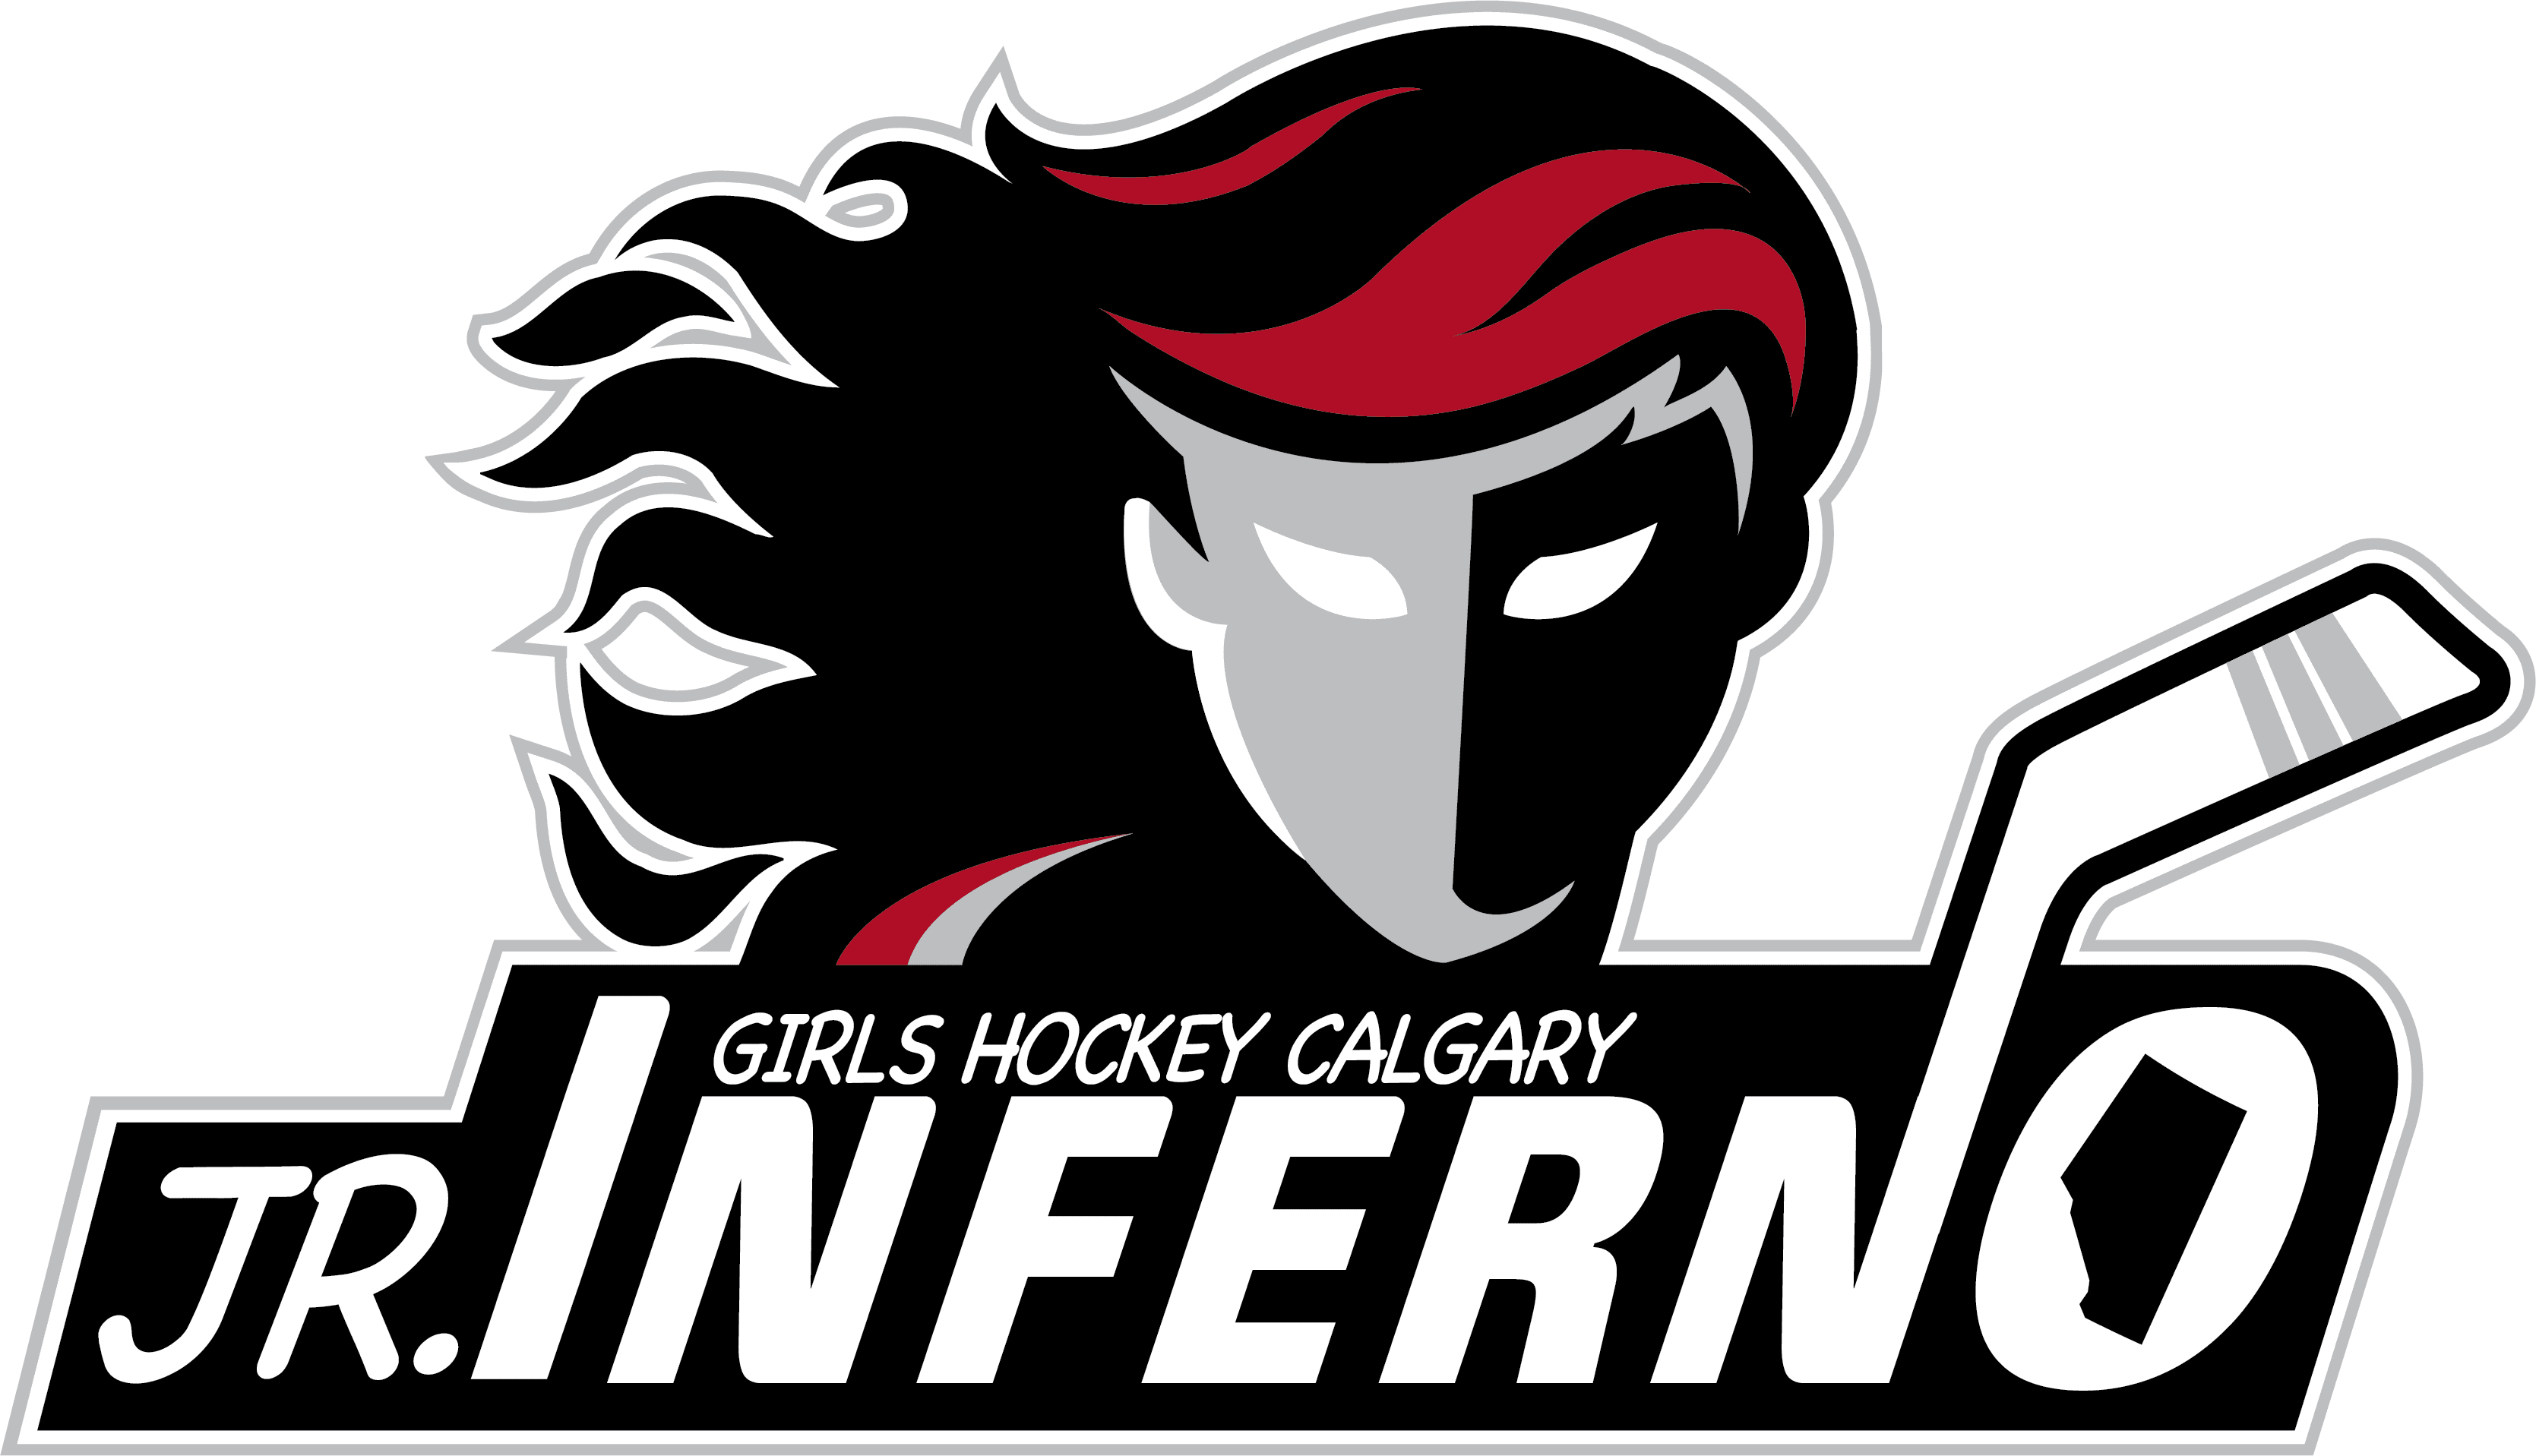 Girls Hockey Calgary  - Jr. inferno